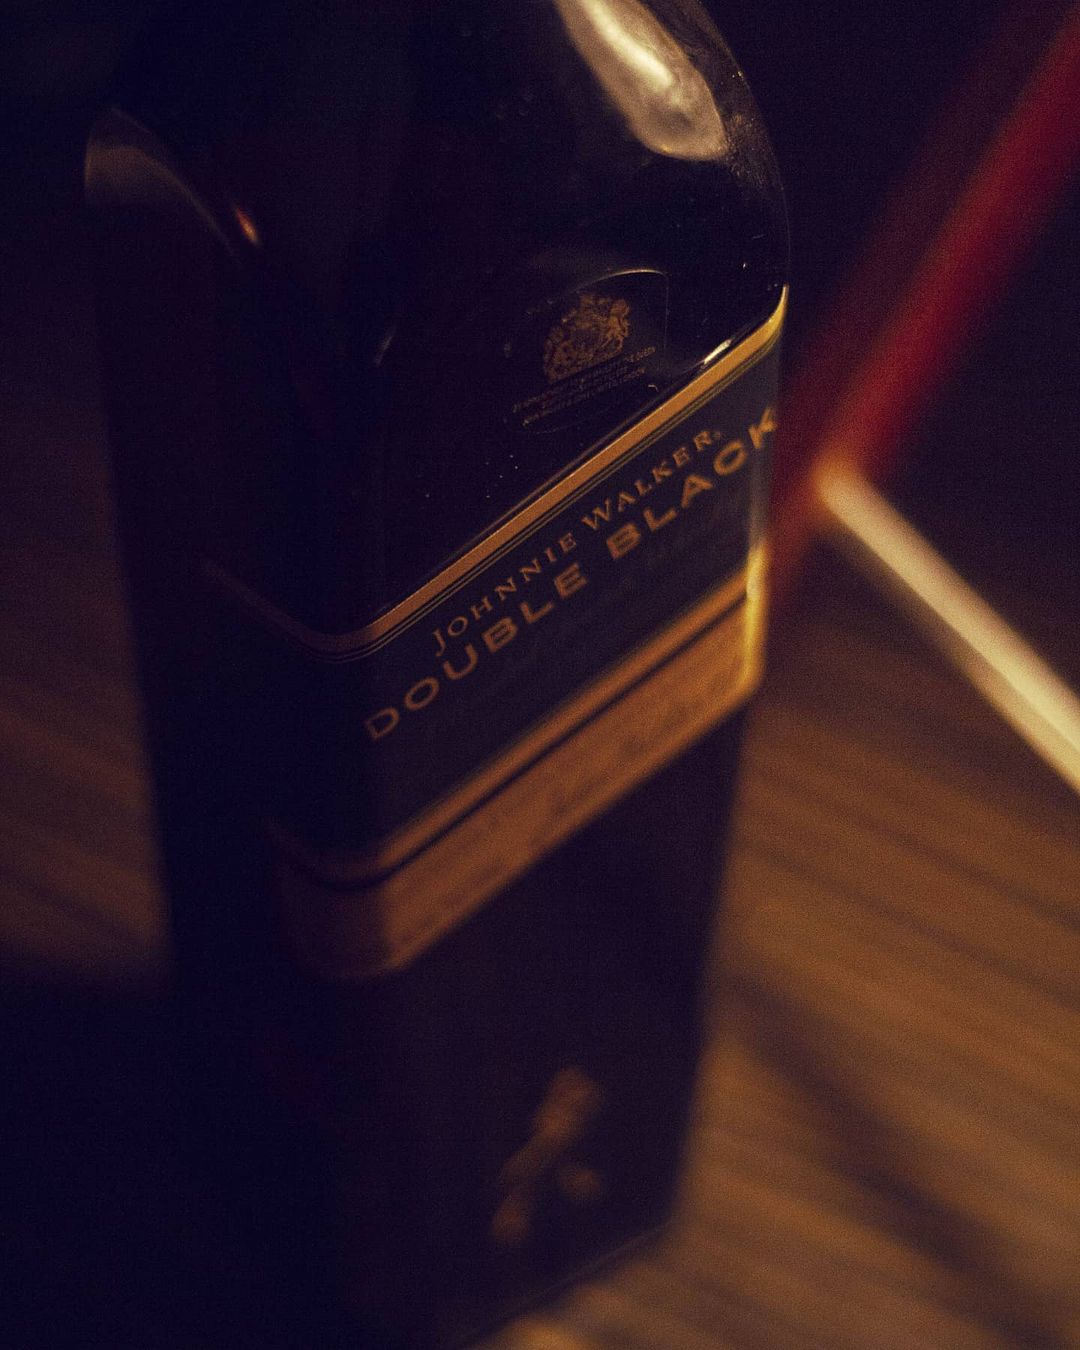 JW Double Black Blended Scotch Whisky